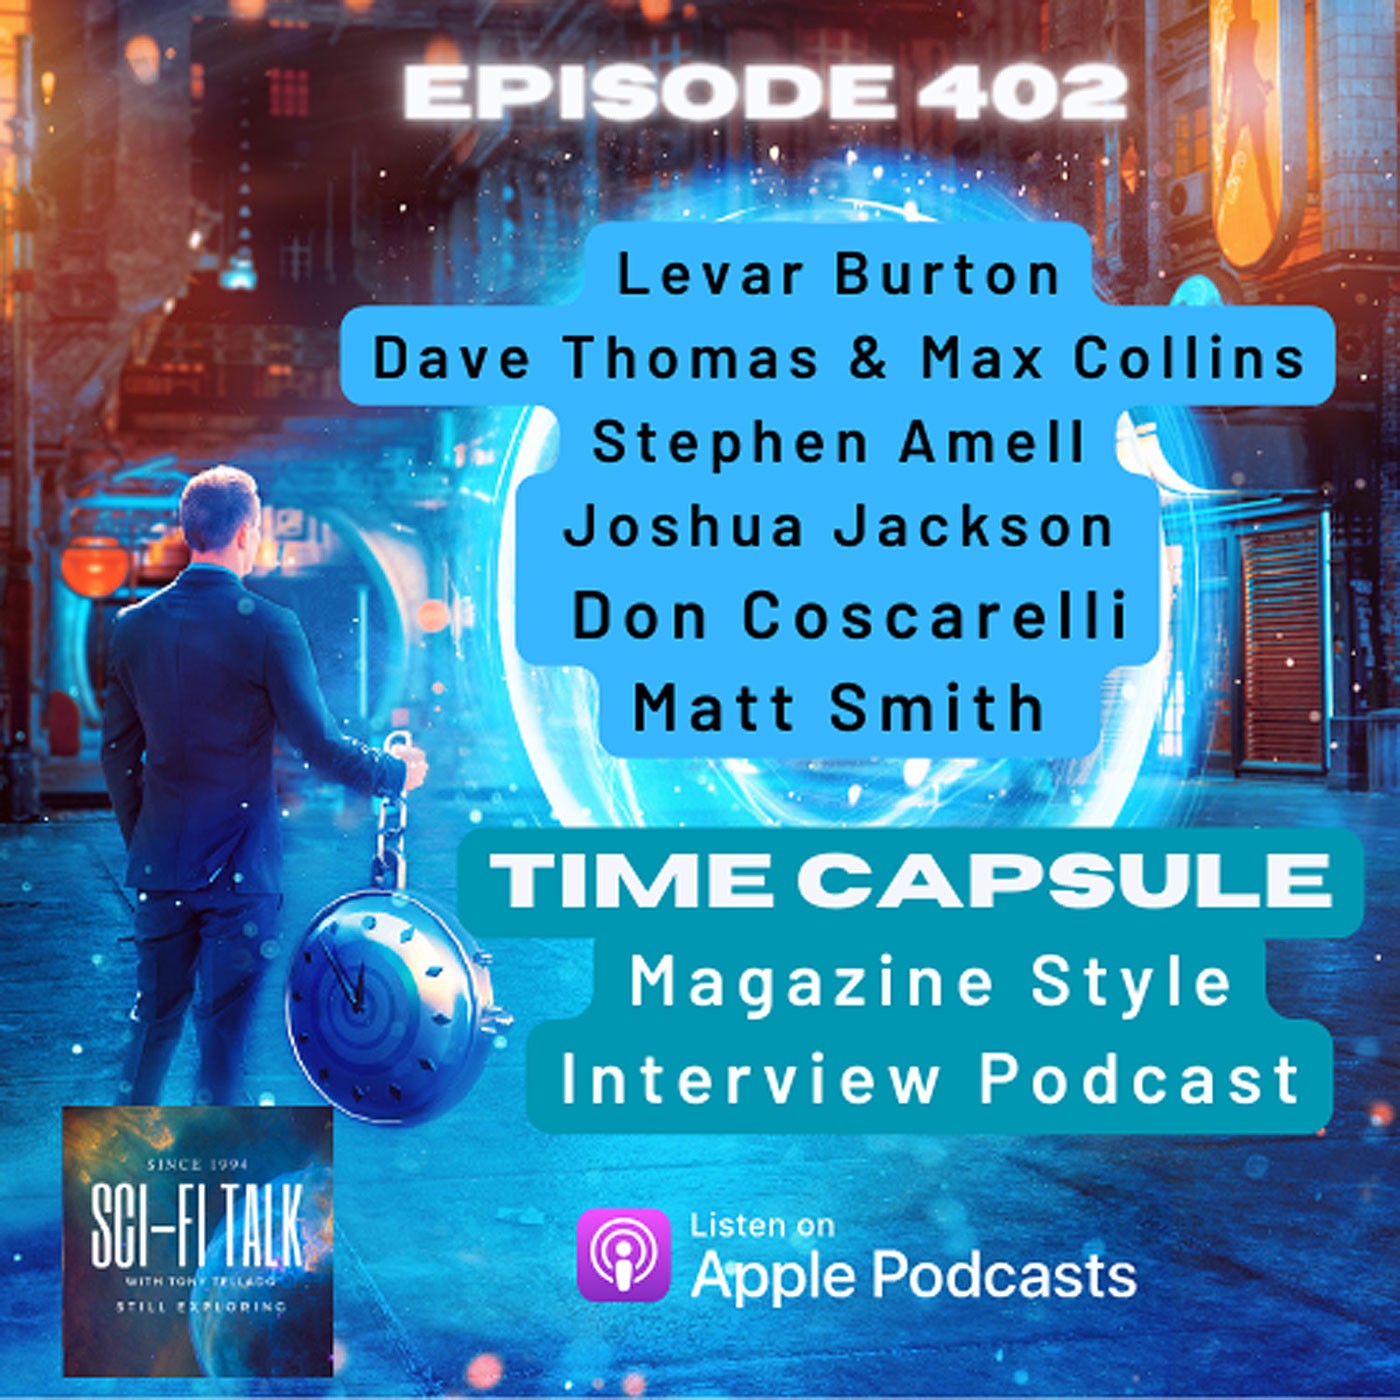 Time Capsule 402 Has Levar Burton, Stephen Amell, Joshua Jackson And More